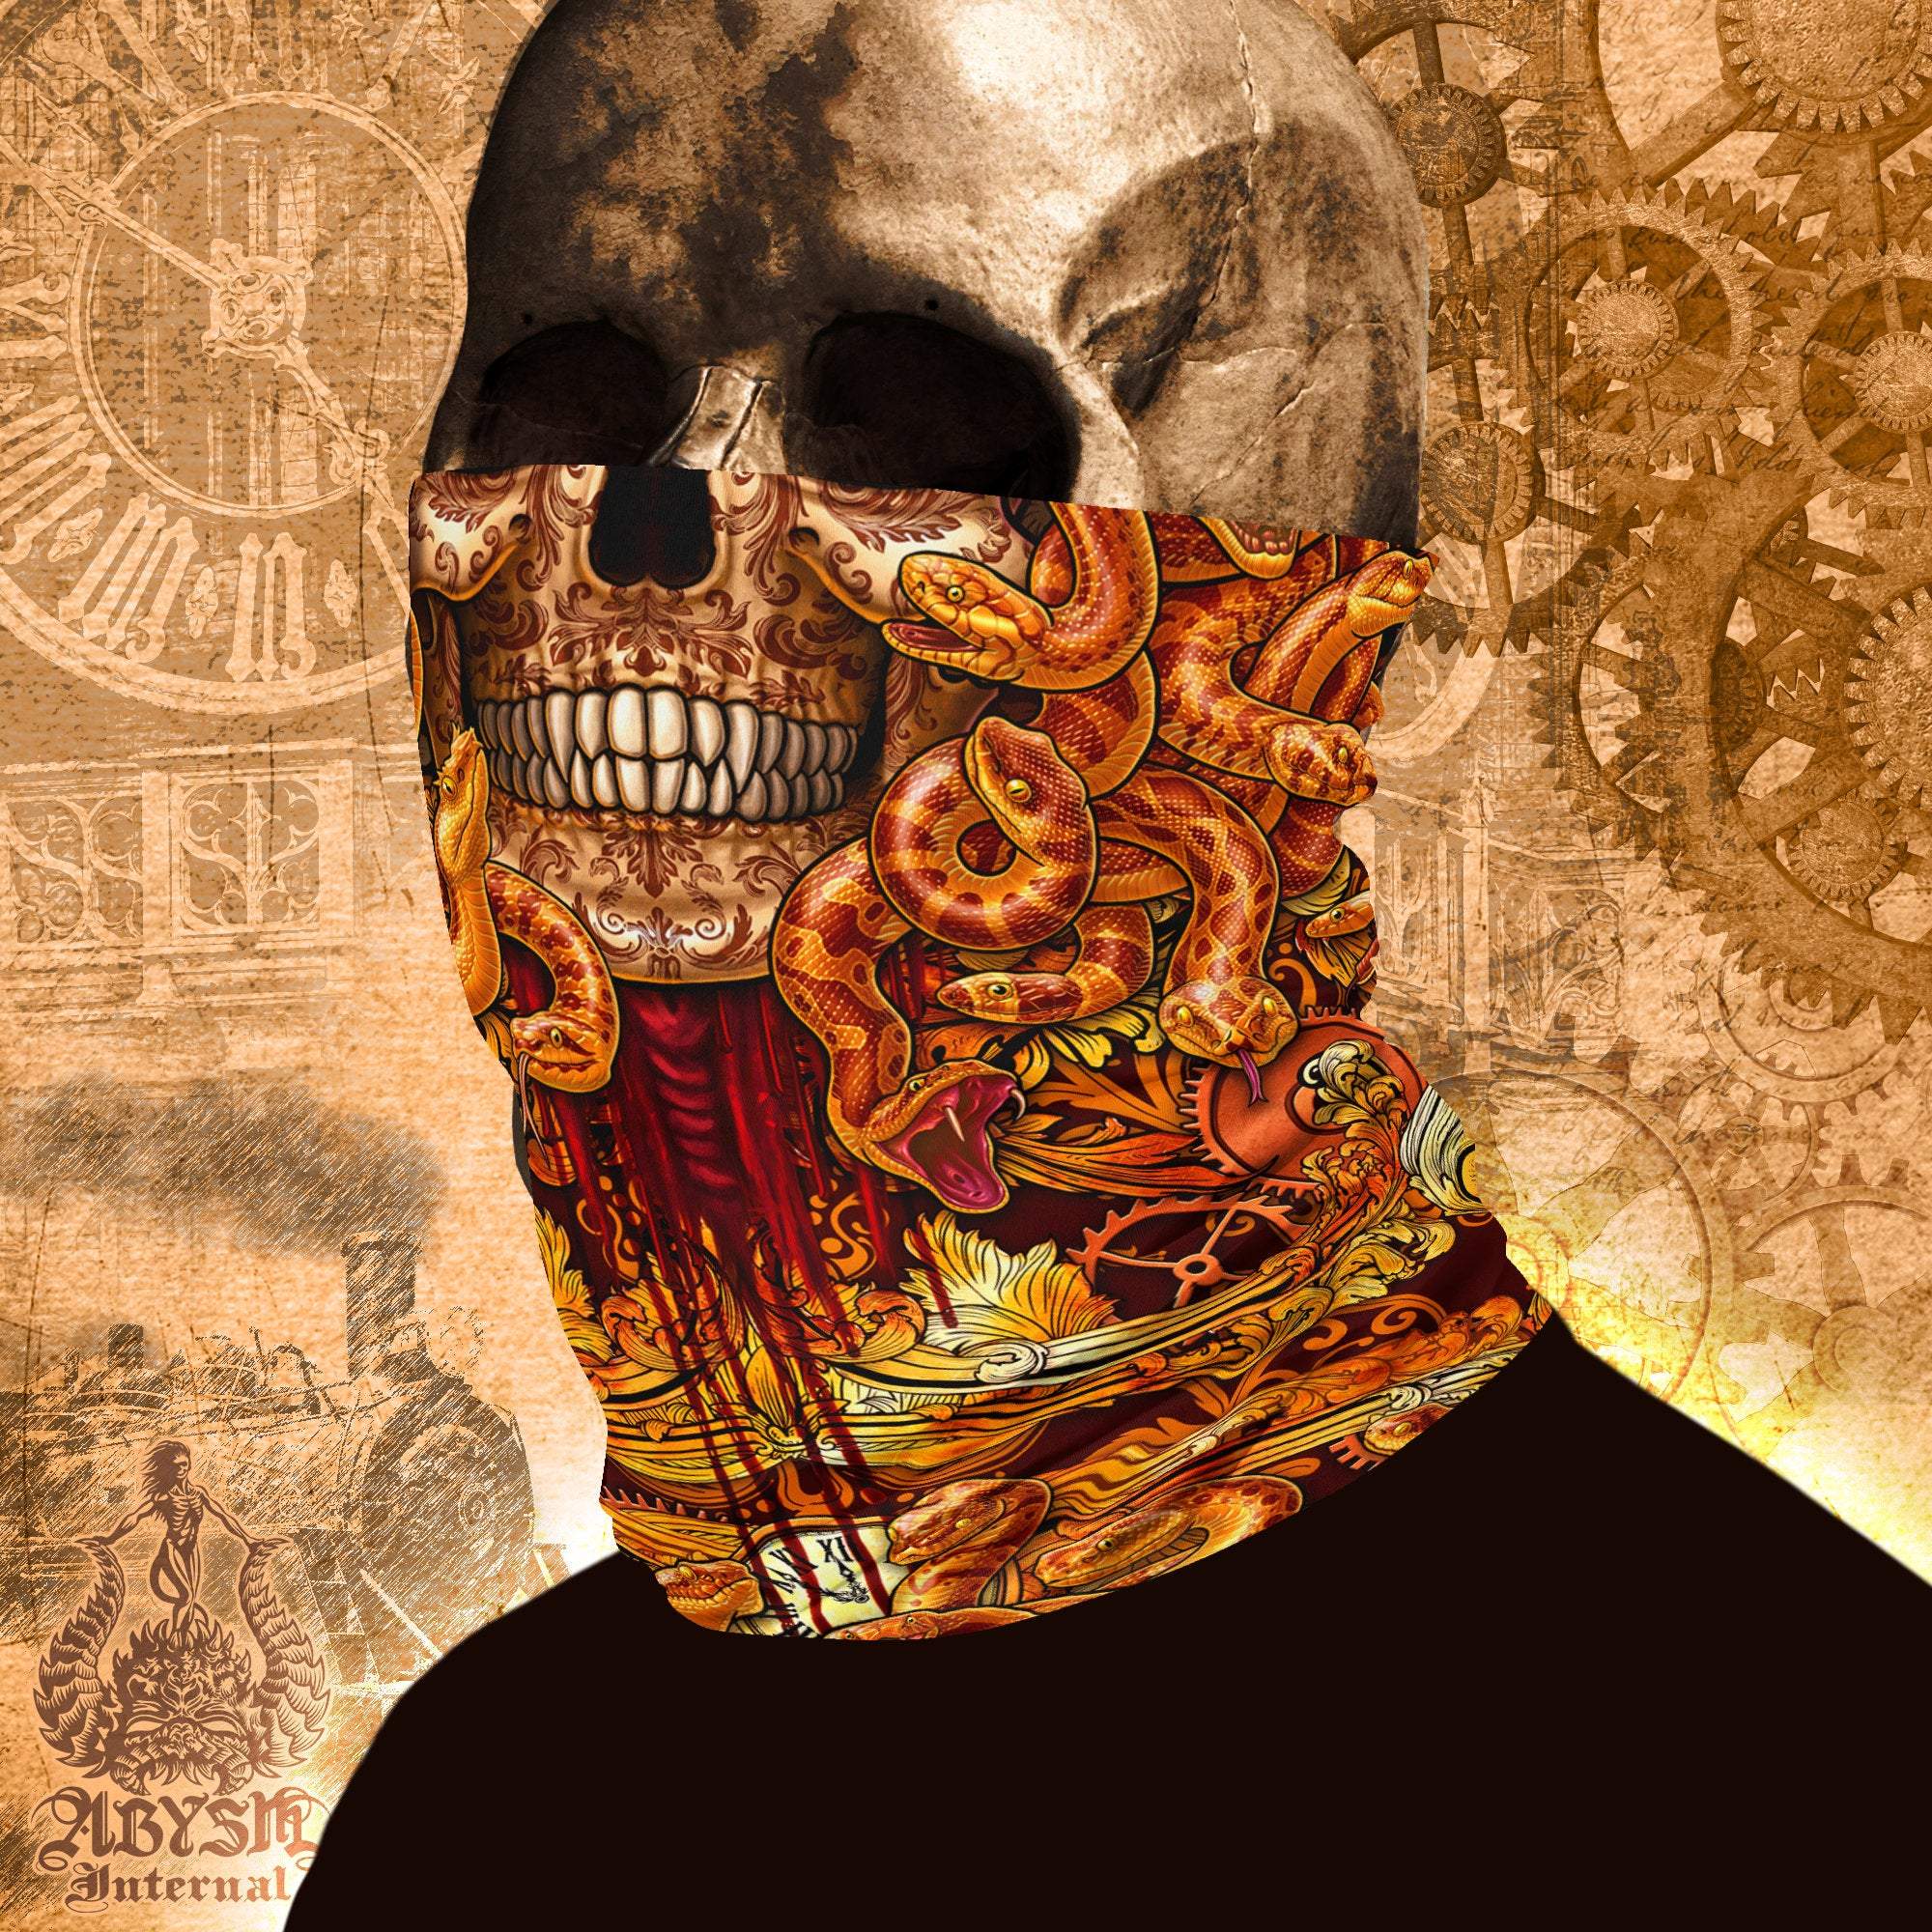 Skull Neck Gaiter, Face Mask, Head Covering, Snakes Headband, Medusa, Steampunk, Fantasy Outfit - 3 Face Options - Abysm Internal